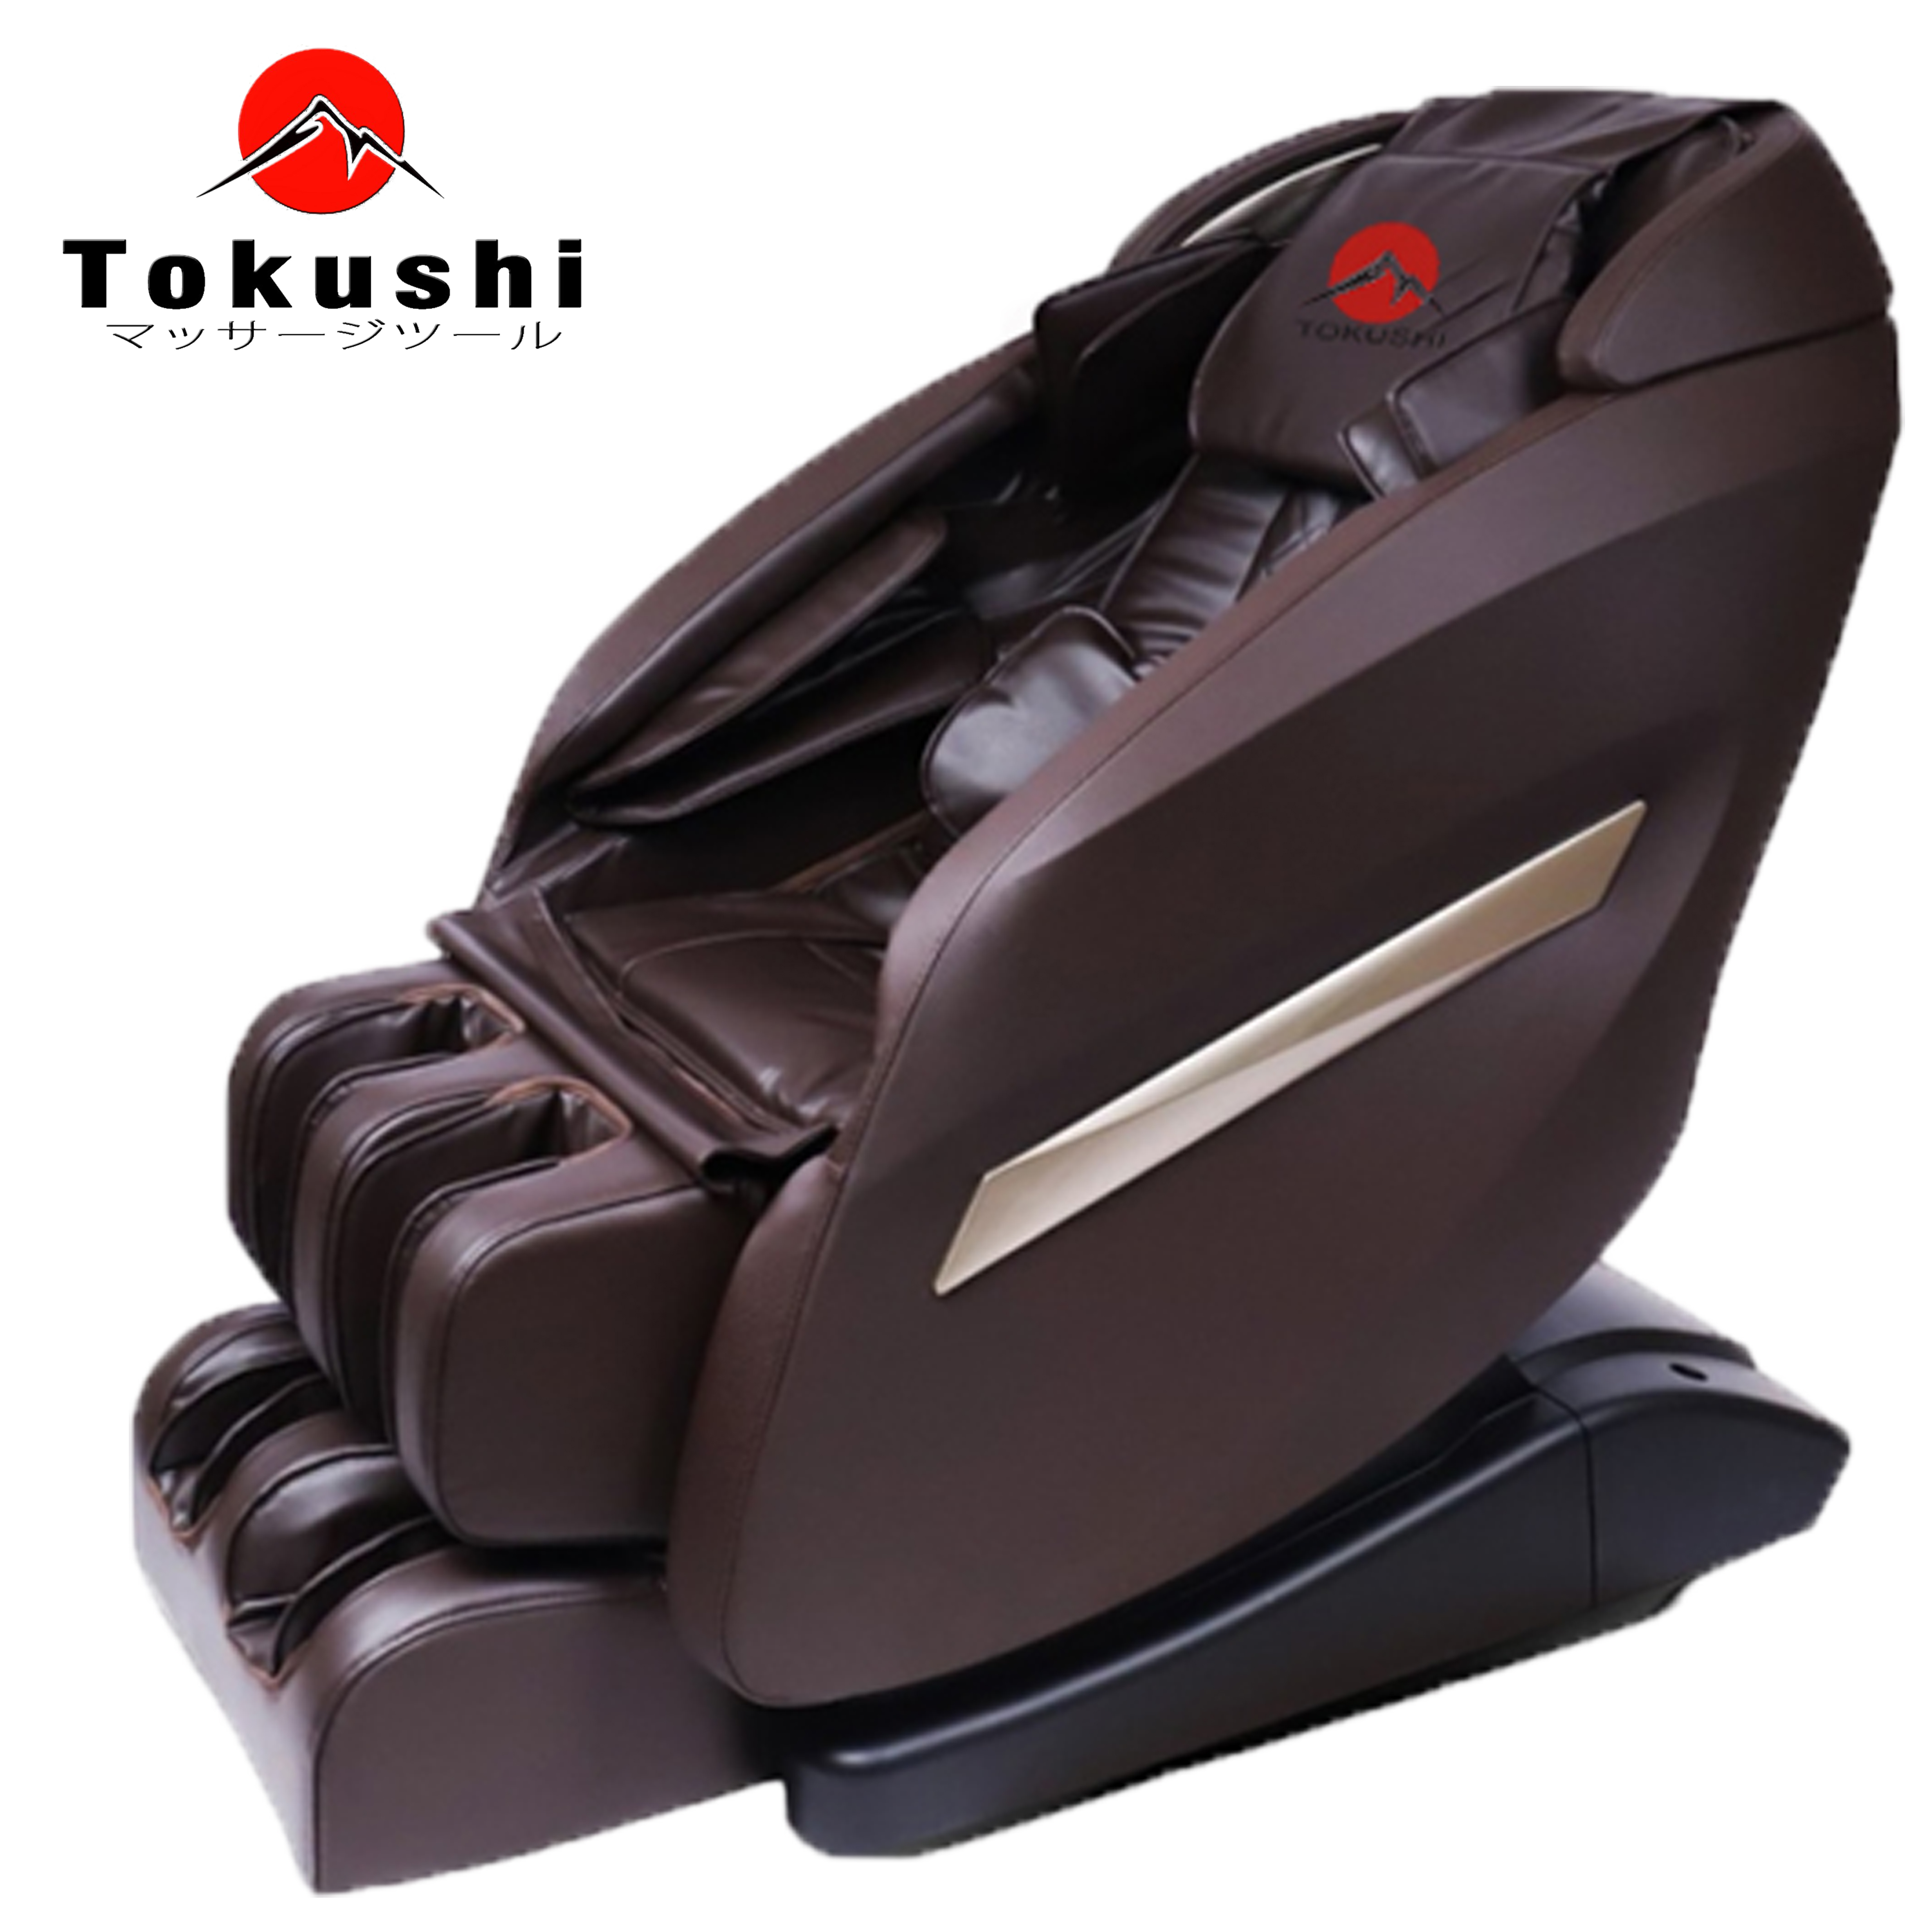 Ghế massage TOKUSHI TK- 88S